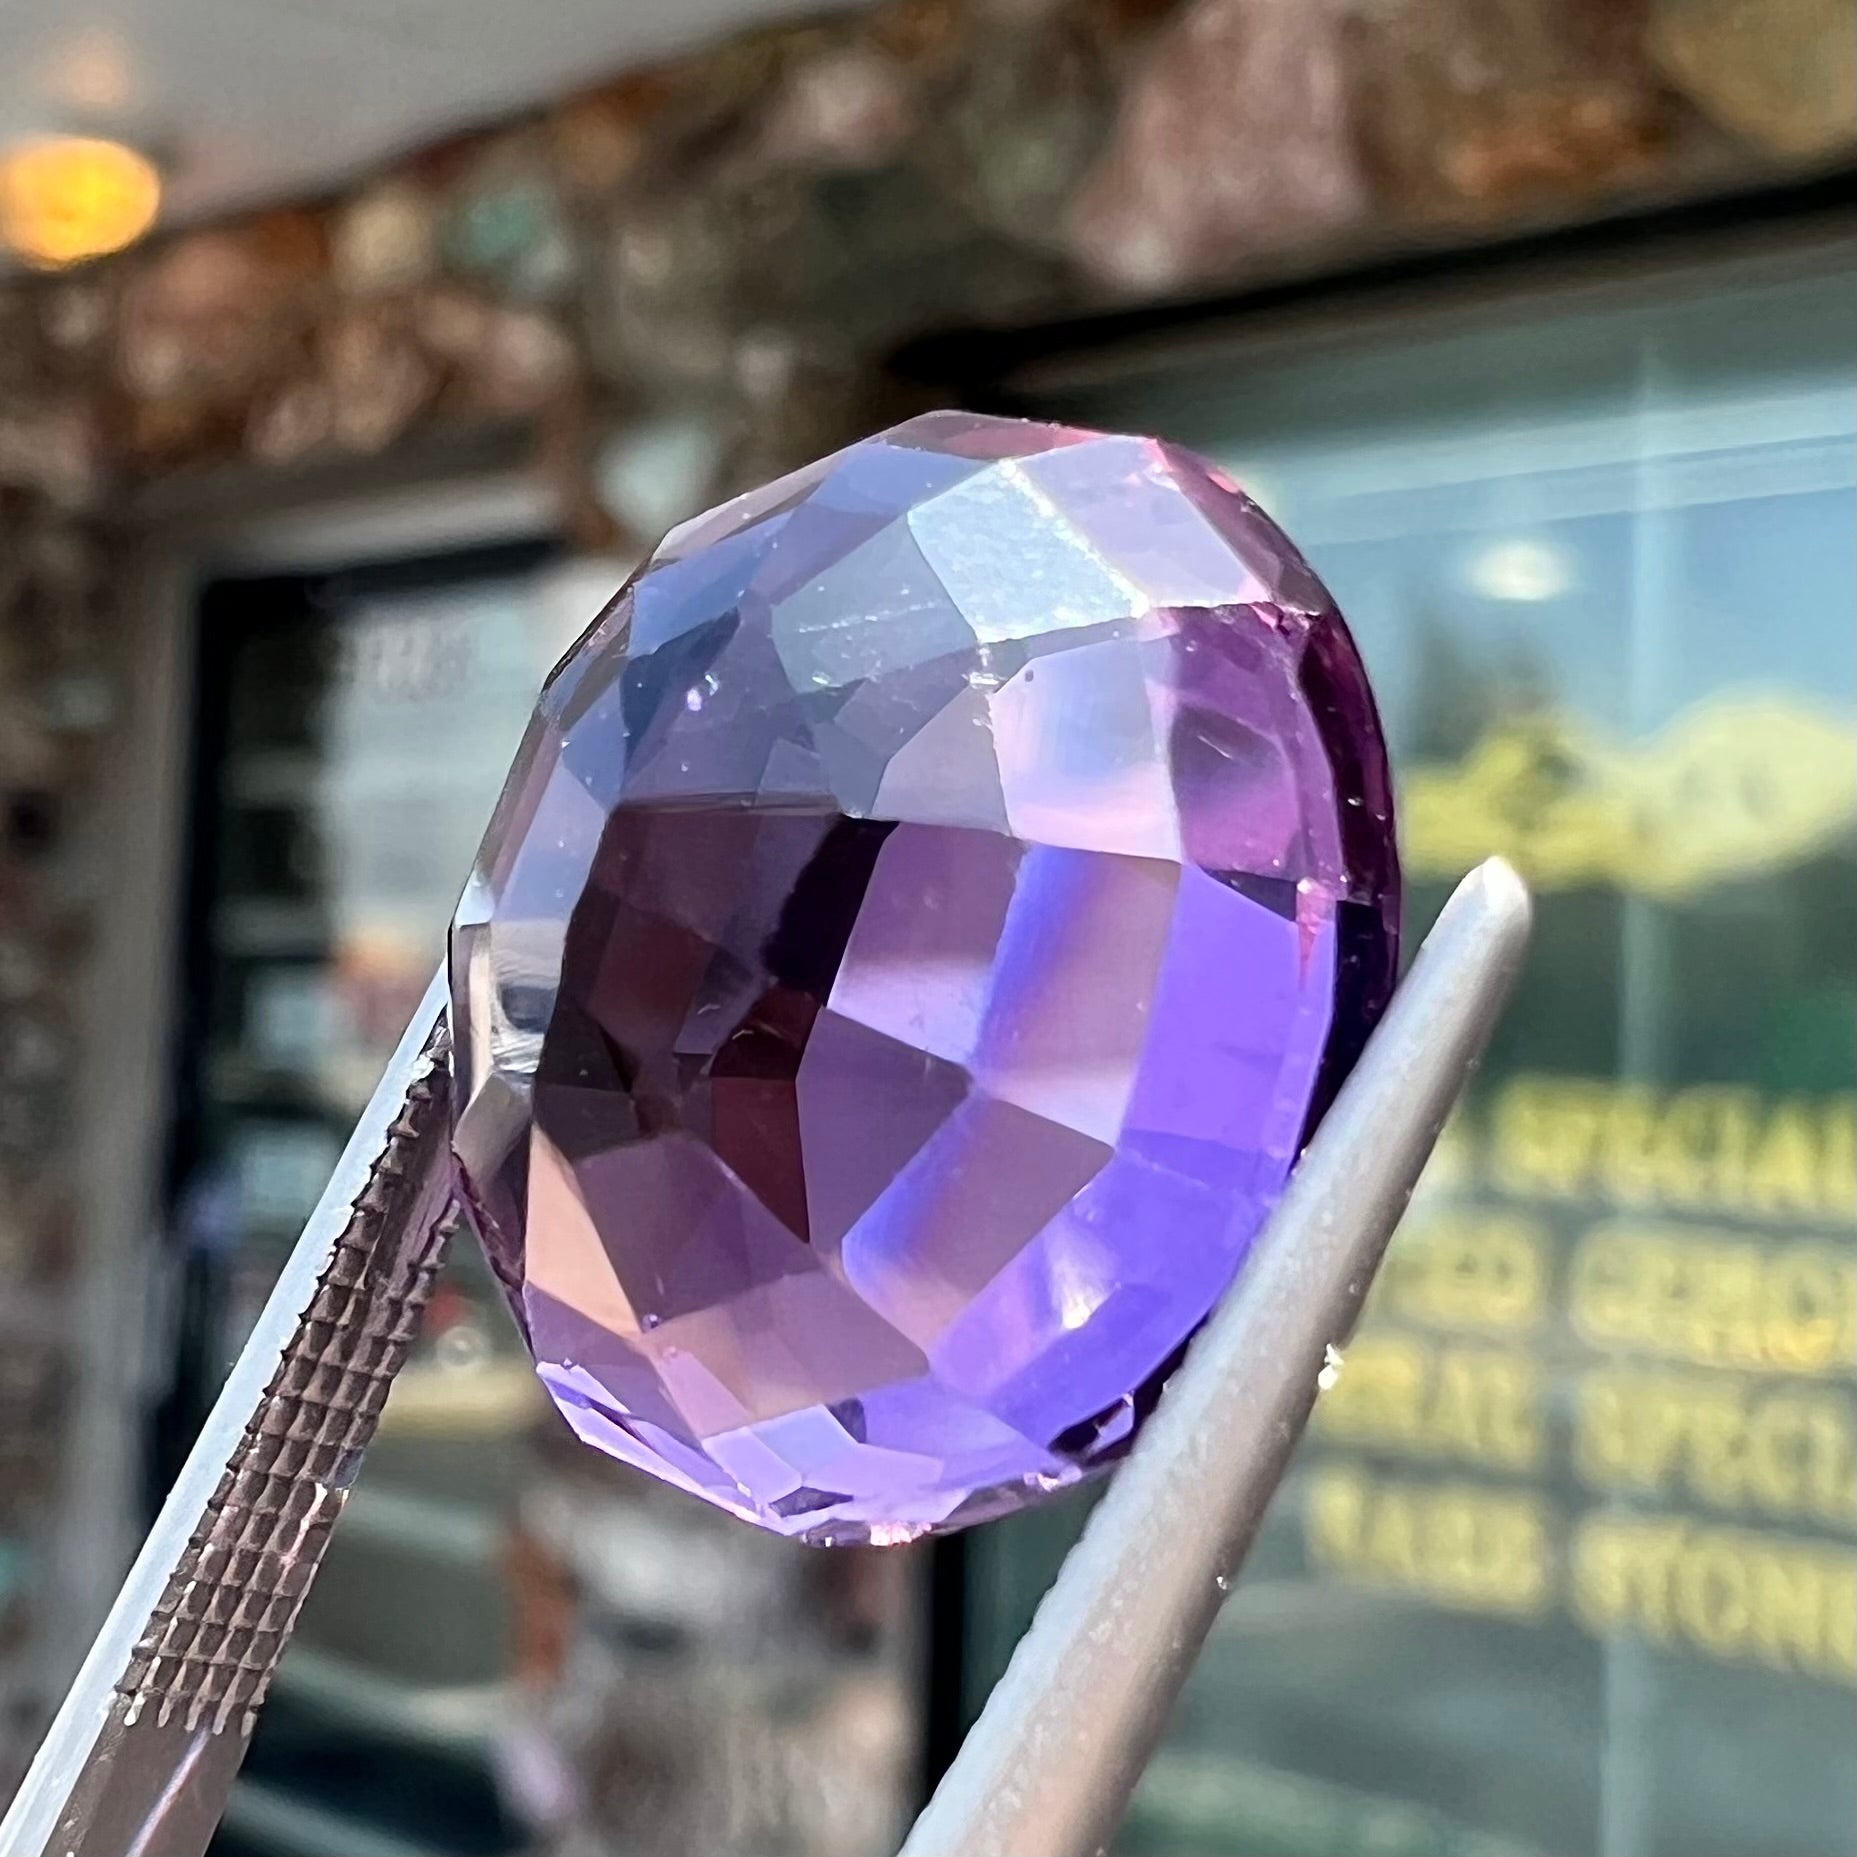 A loose, modified oval cut purple amethyst gemstone.